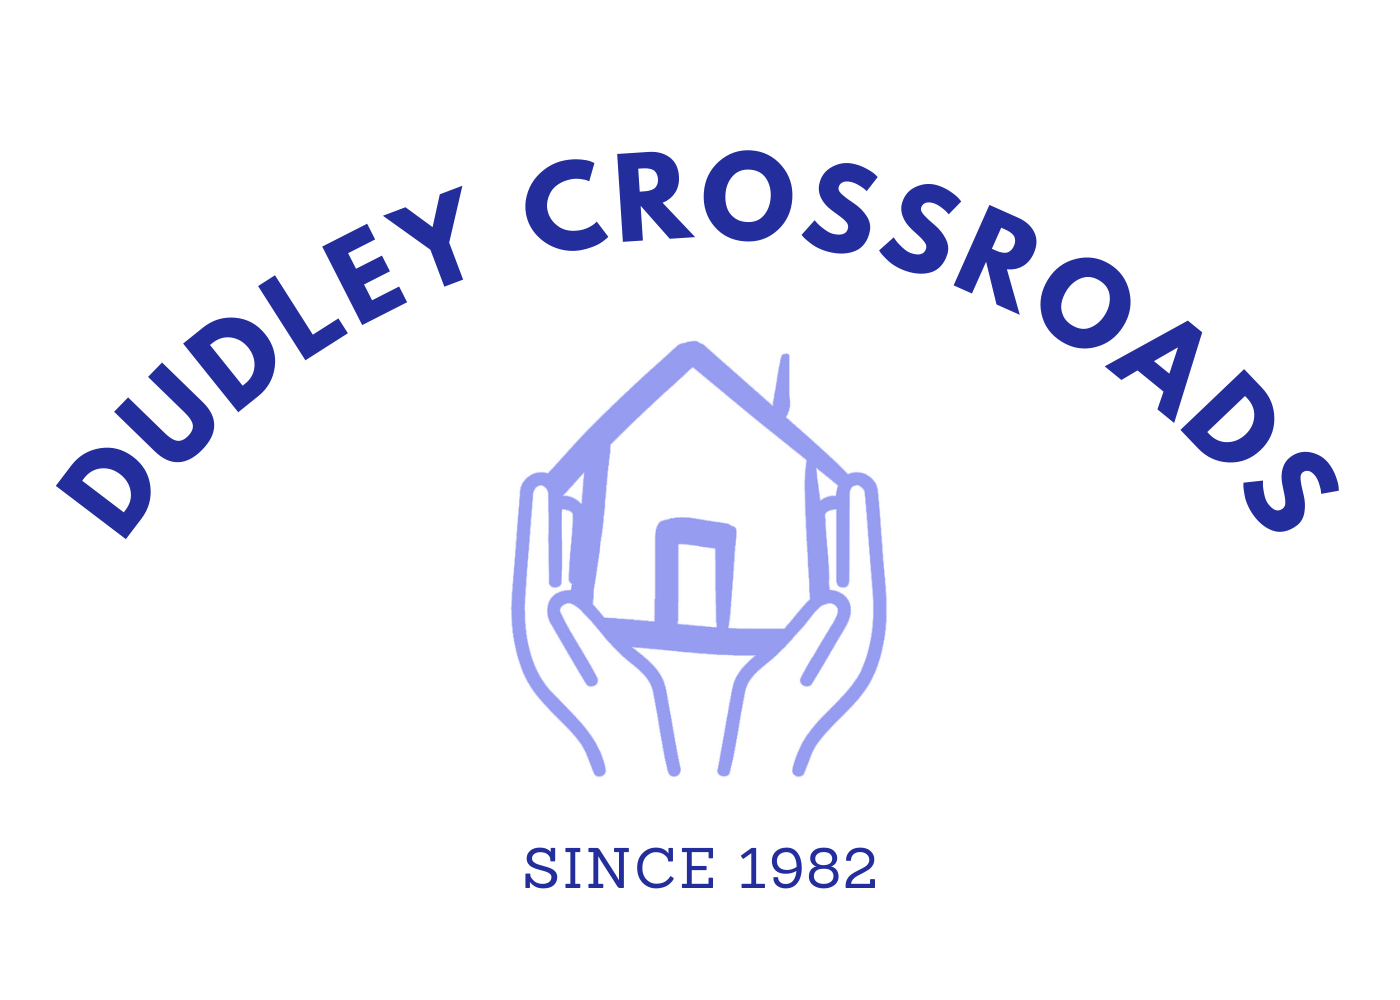 Dudley Crossroads